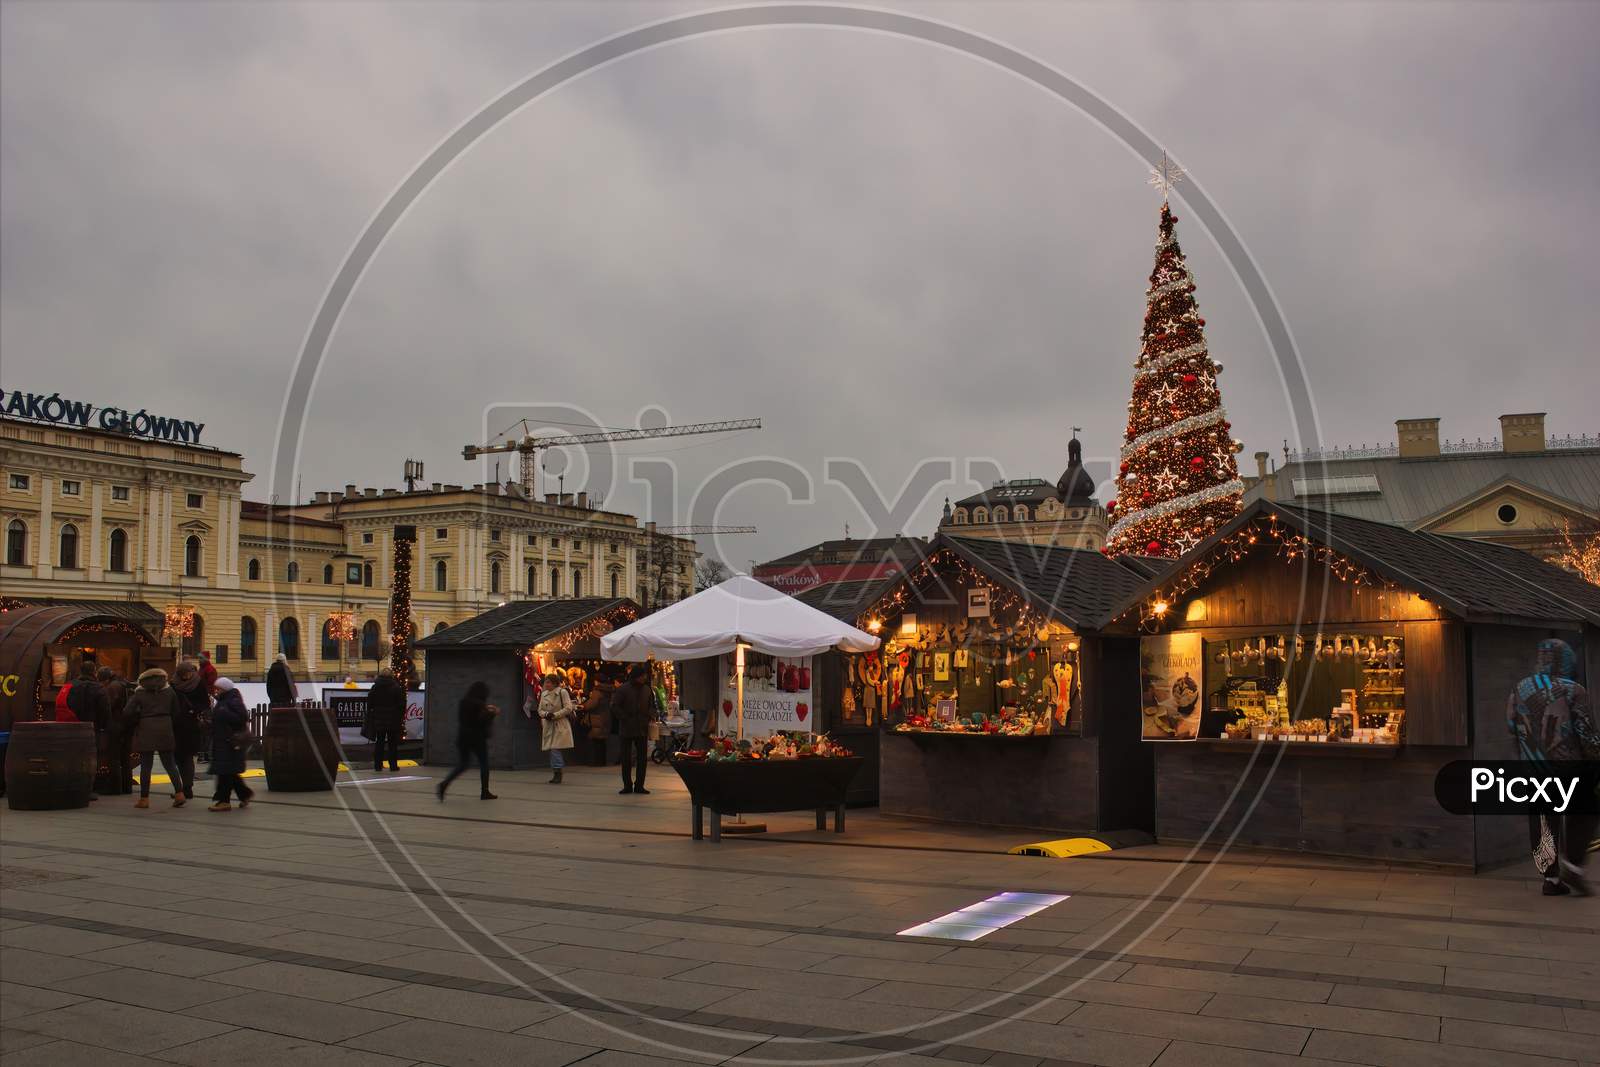 Krakow, Poland - November 30, 2014: A View Of Gift And Souvenir Shops Before Christmas Tree